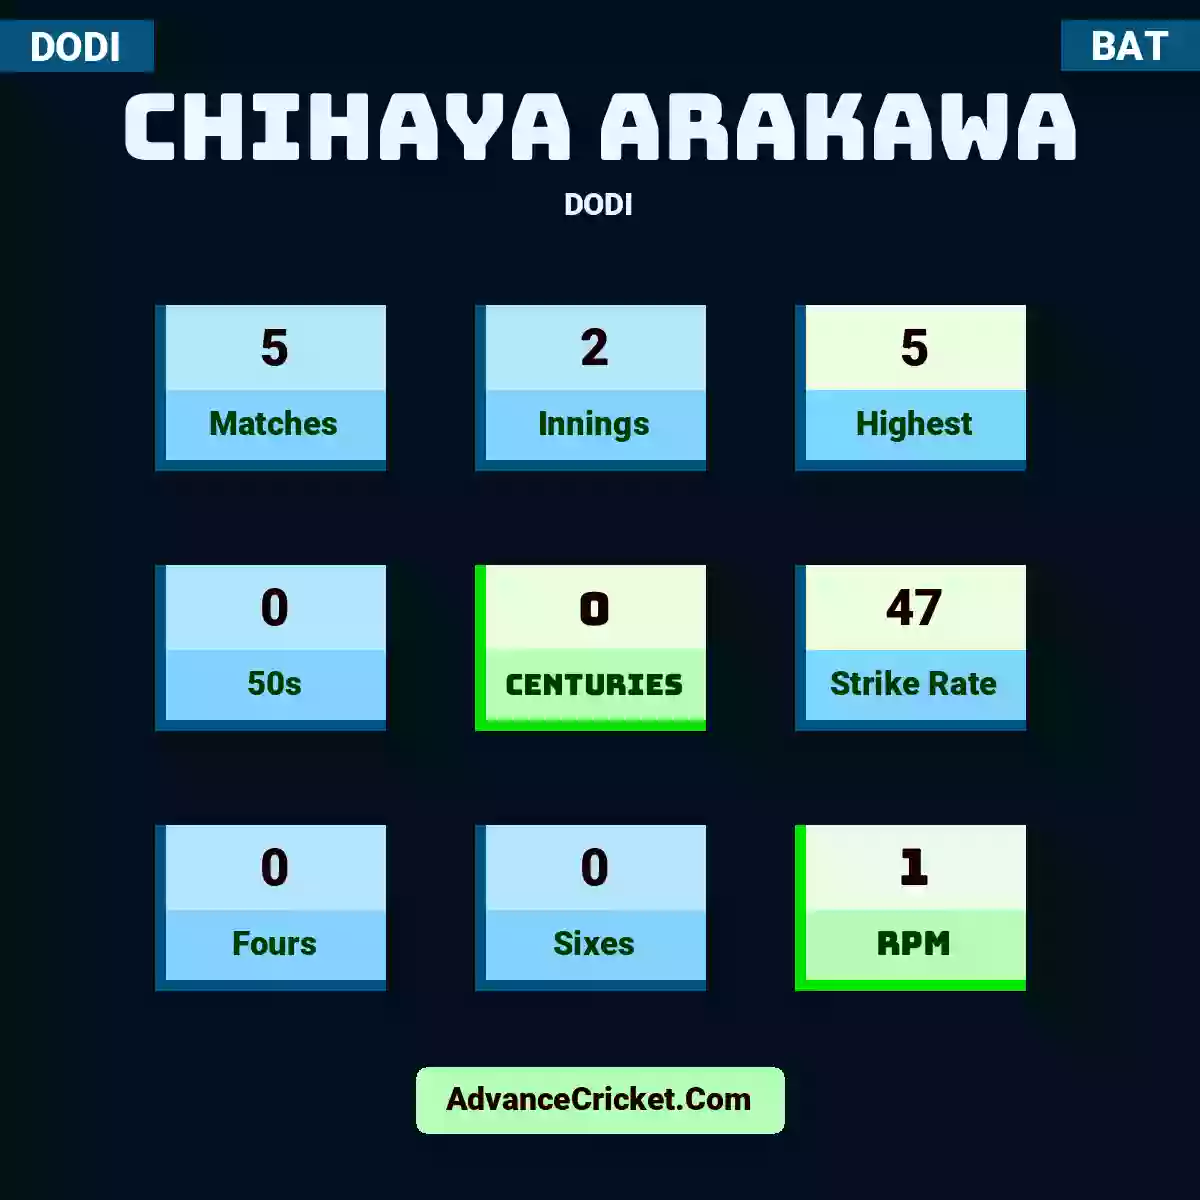 Chihaya Arakawa DODI , Chihaya Arakawa played 5 matches, scored 5 runs as highest, 0 half-centuries, and 0 centuries, with a strike rate of 47. C.Arakawa hit 0 fours and 0 sixes, with an RPM of 1.